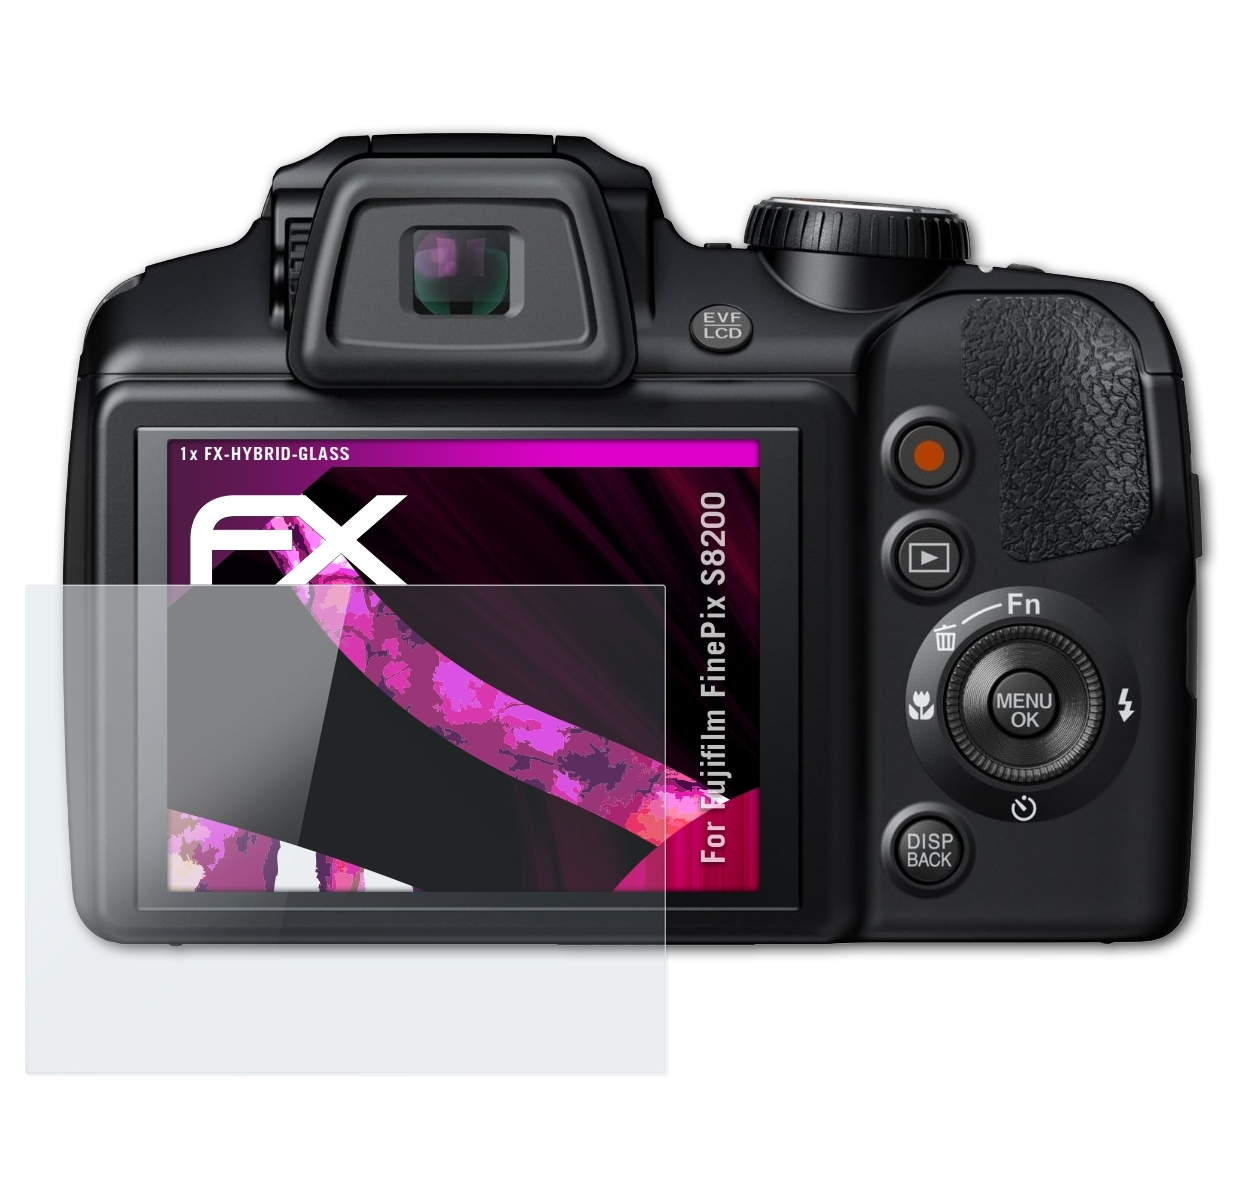 ATFOLIX FX-Hybrid-Glass Schutzglas(für S8200) Fujifilm FinePix